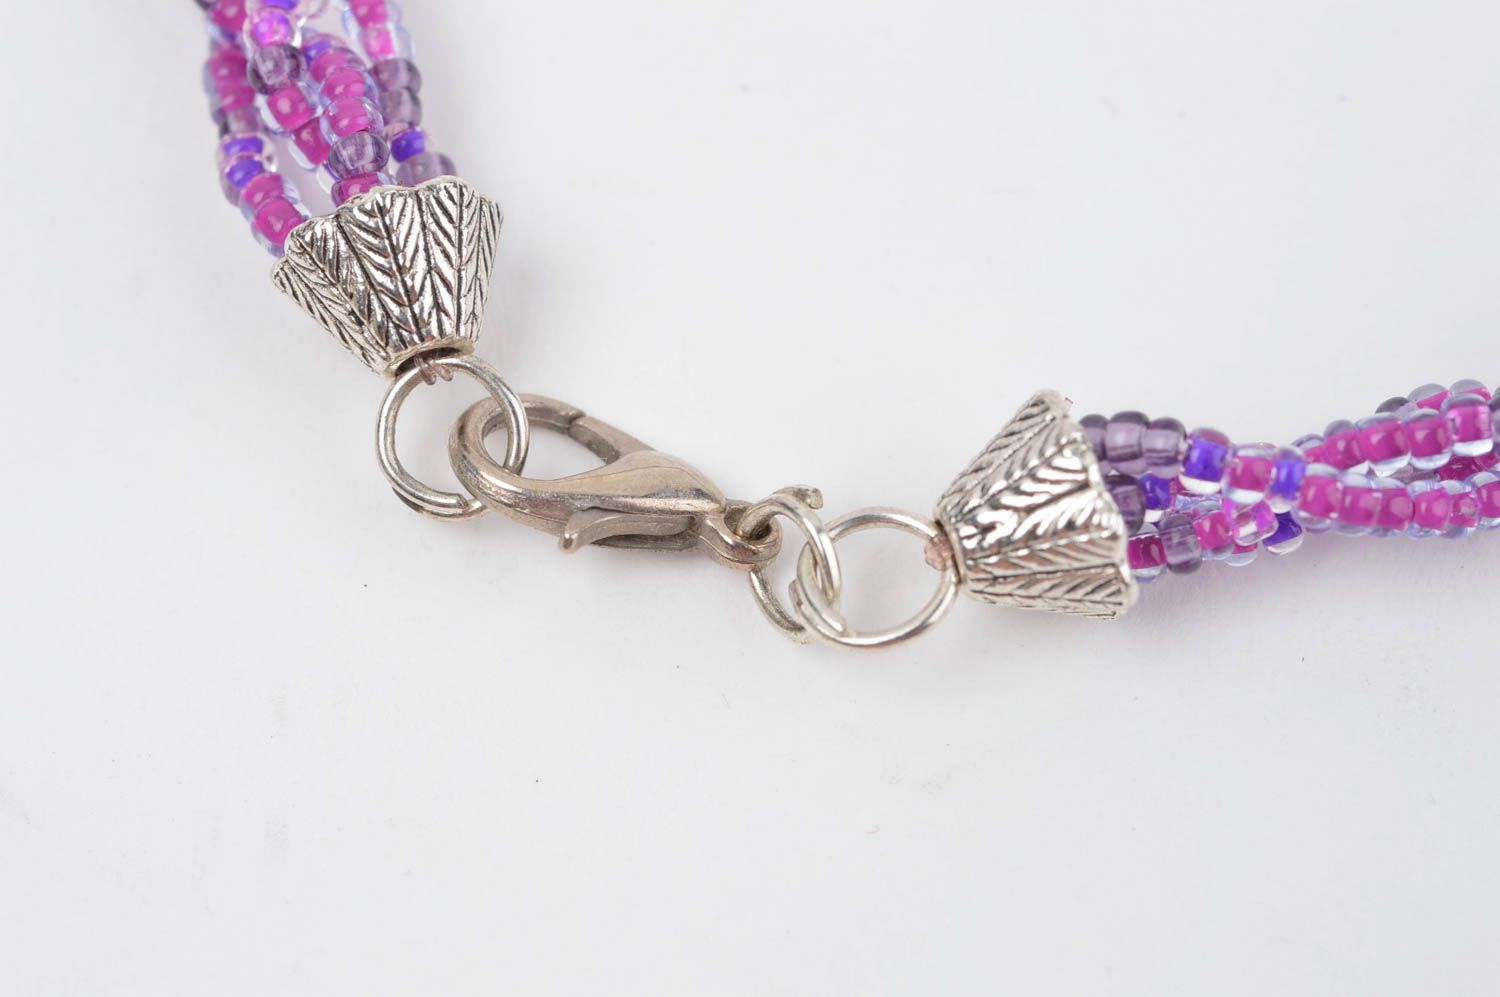 Handmade bead necklace for women gift ideas unusual accessory designer jewelry photo 3